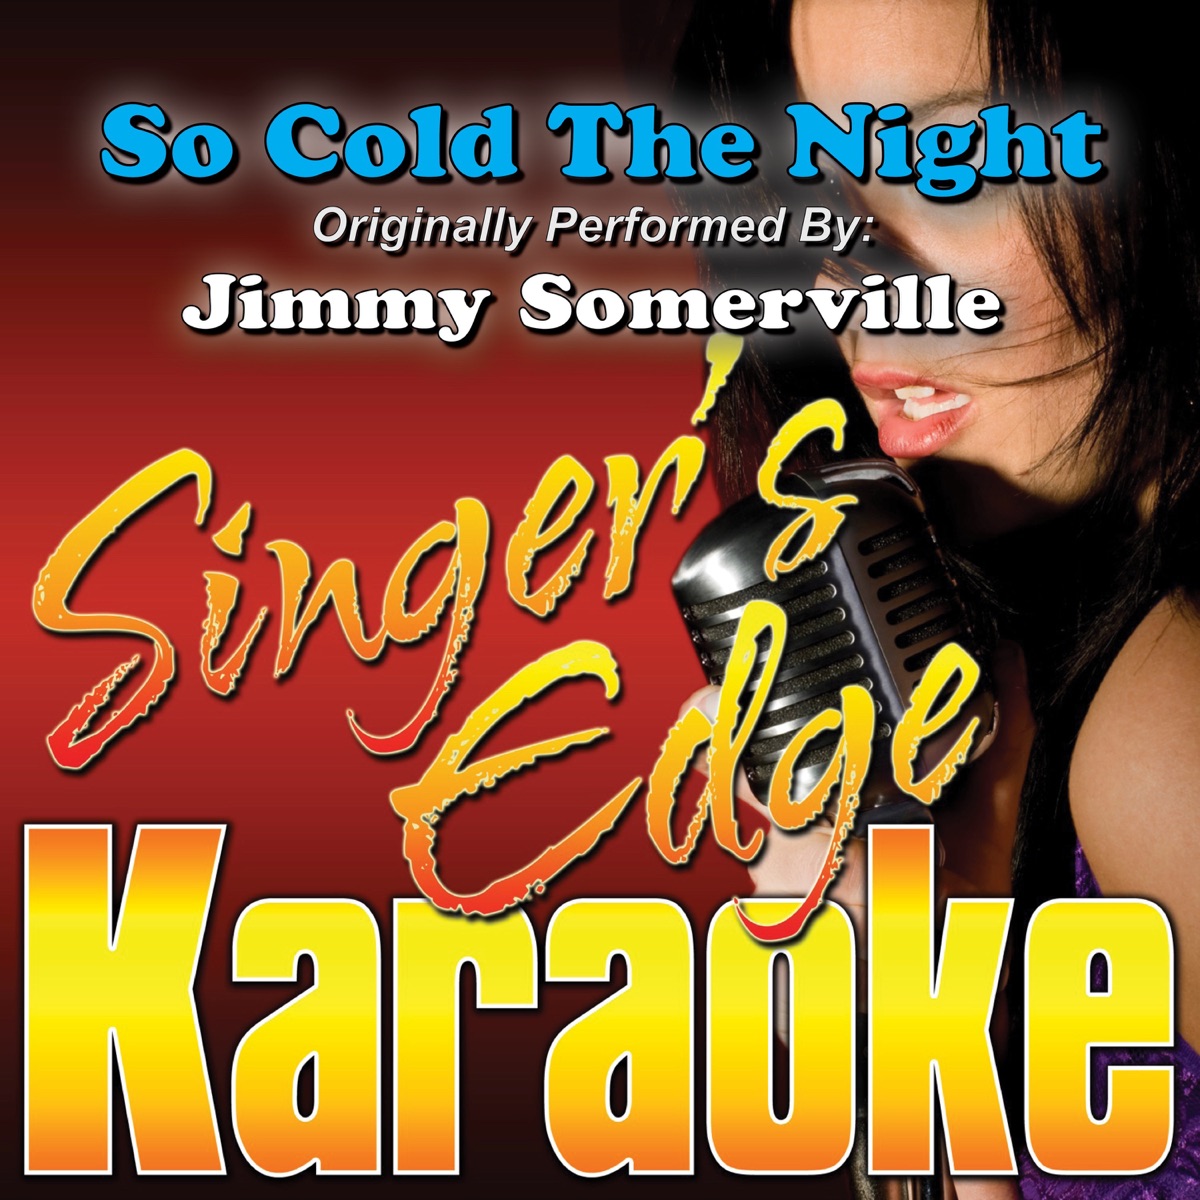 So Cold the Night (Originally Performed By Jimmy Somerville) [Karaoke  Version] - Single - Album by Singer's Edge Karaoke - Apple Music